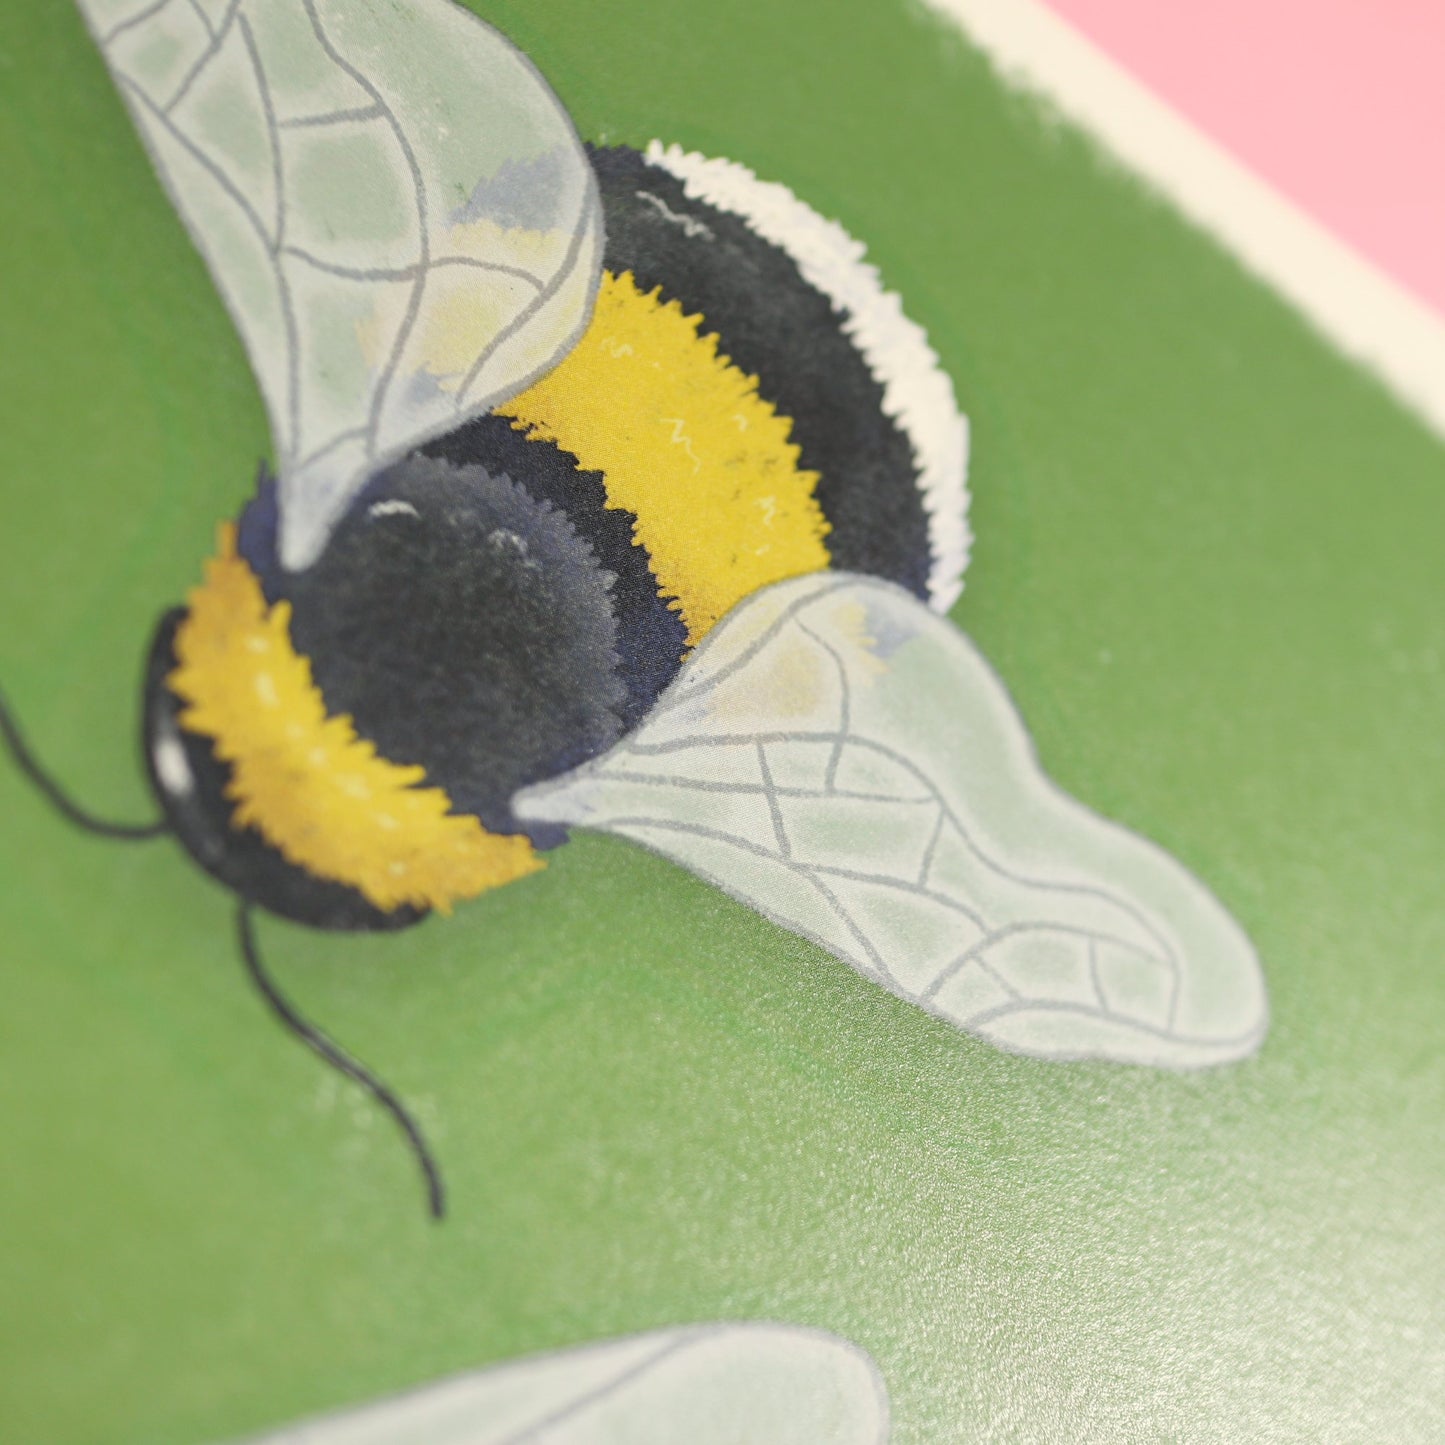 Bumblebees A4 Print